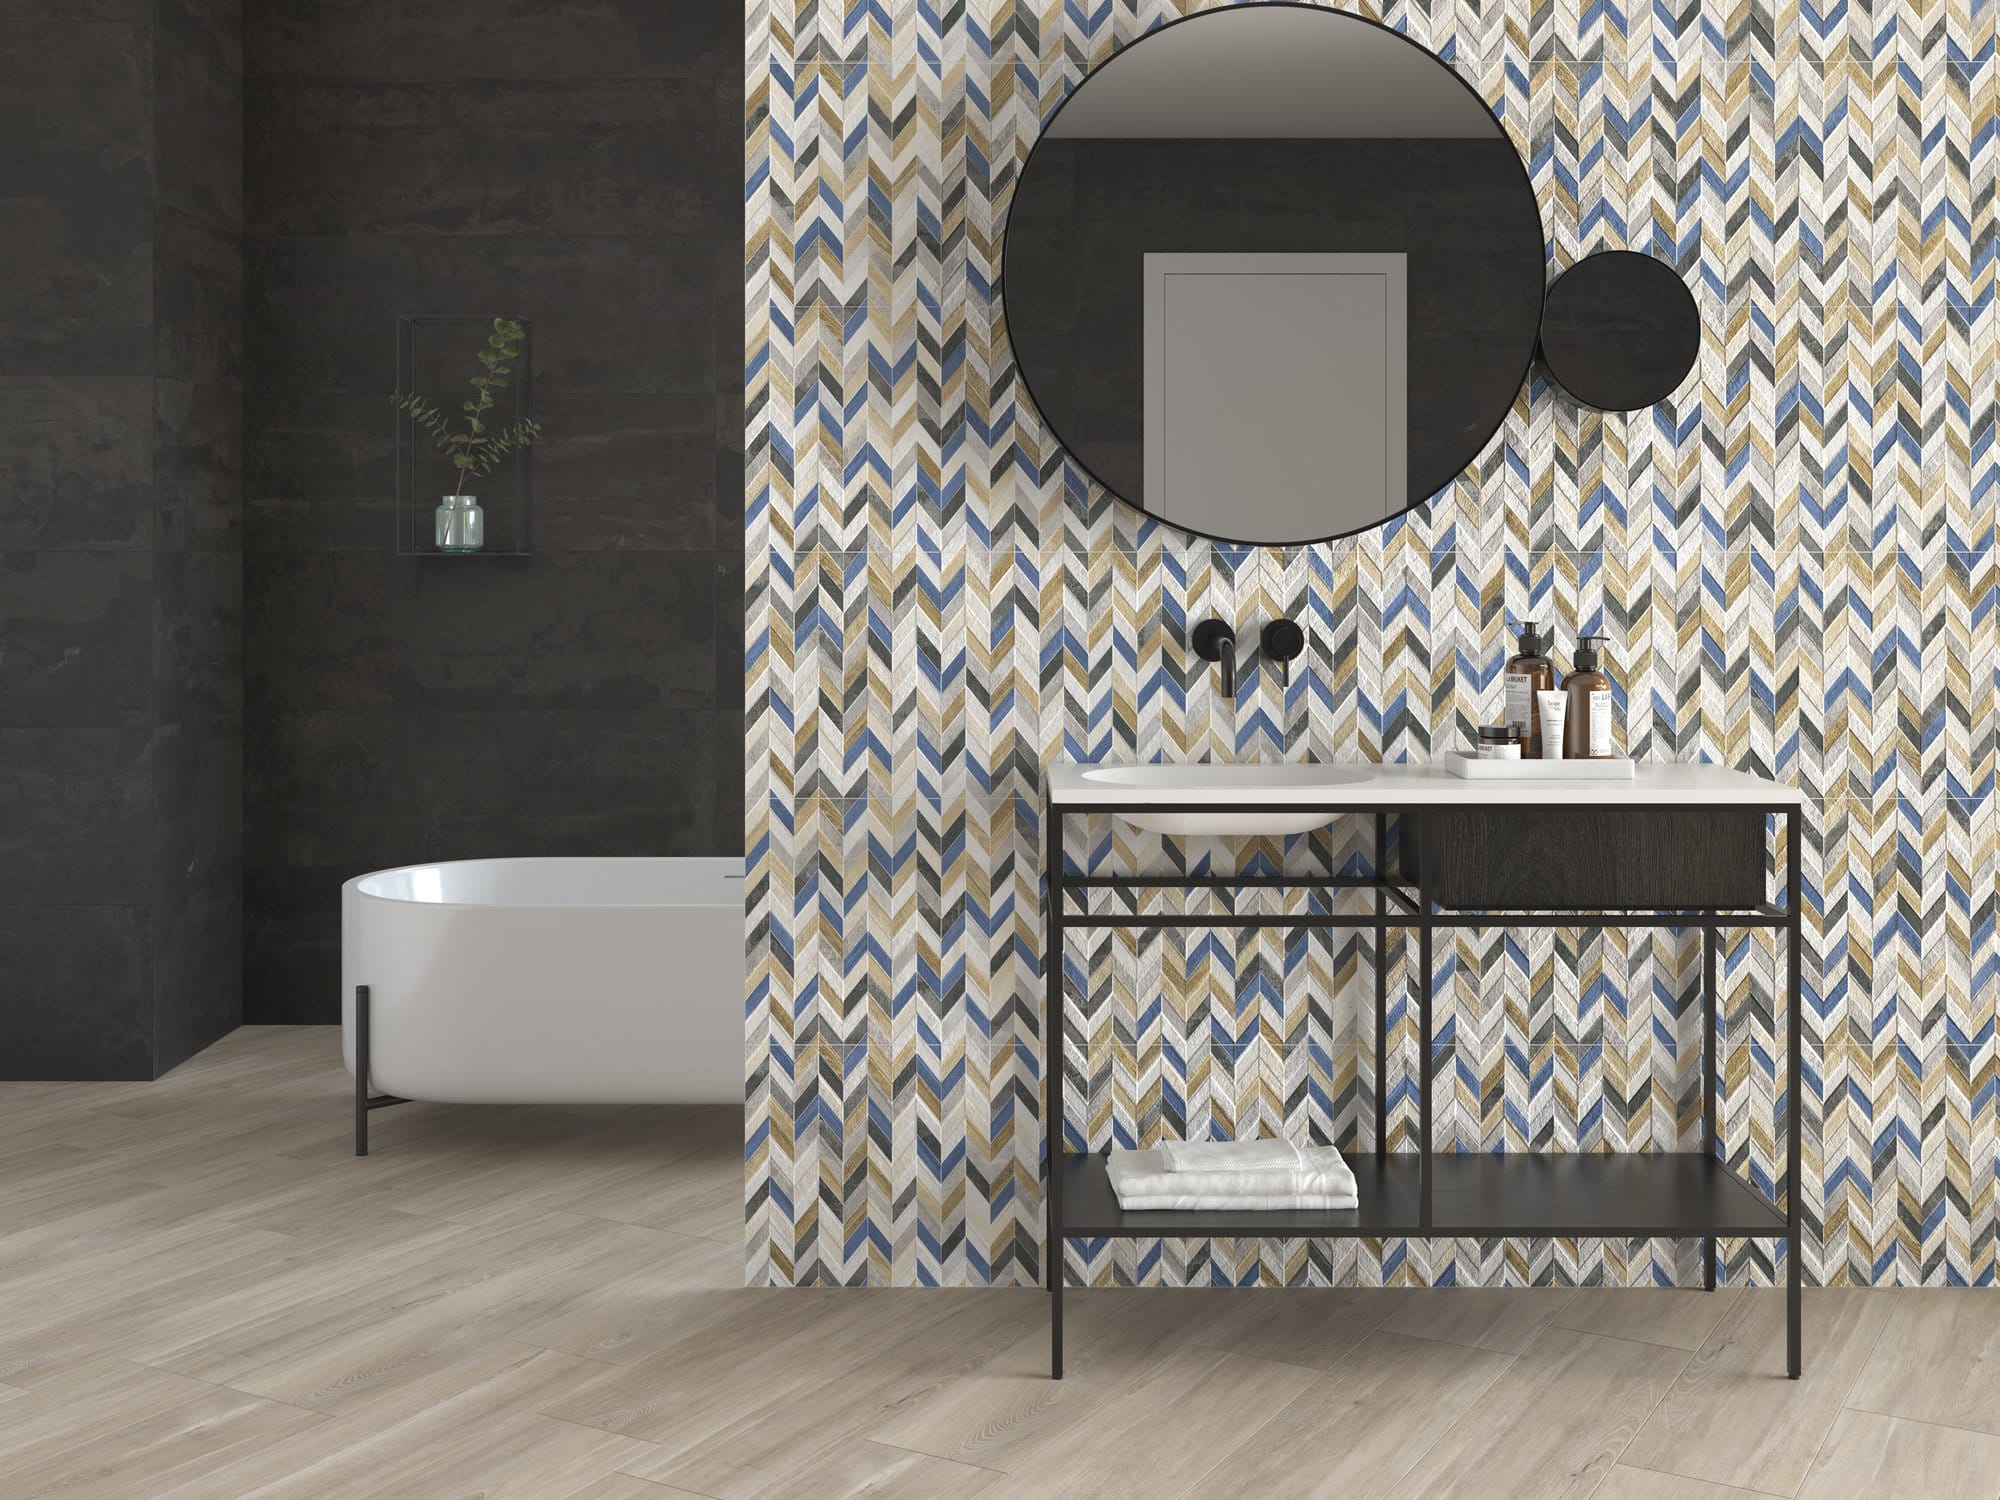 FLOOR CELAIN Porcelain Bathroom Leeds Clayton Mix Wall tiles and Wooden Flooring tiles